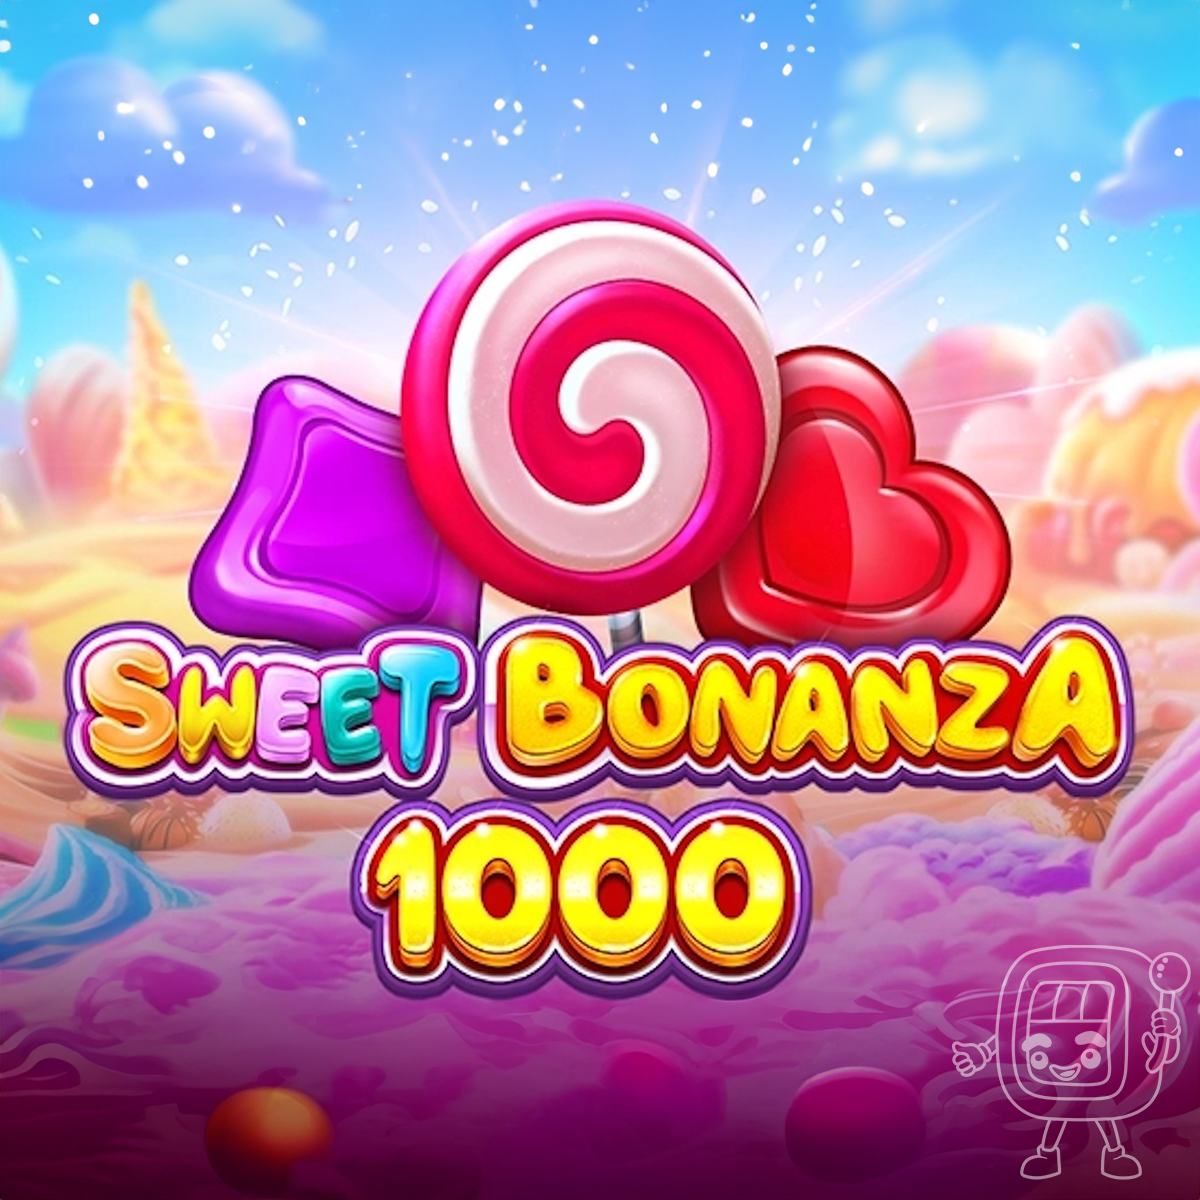 sweet bonanza 1000 slot